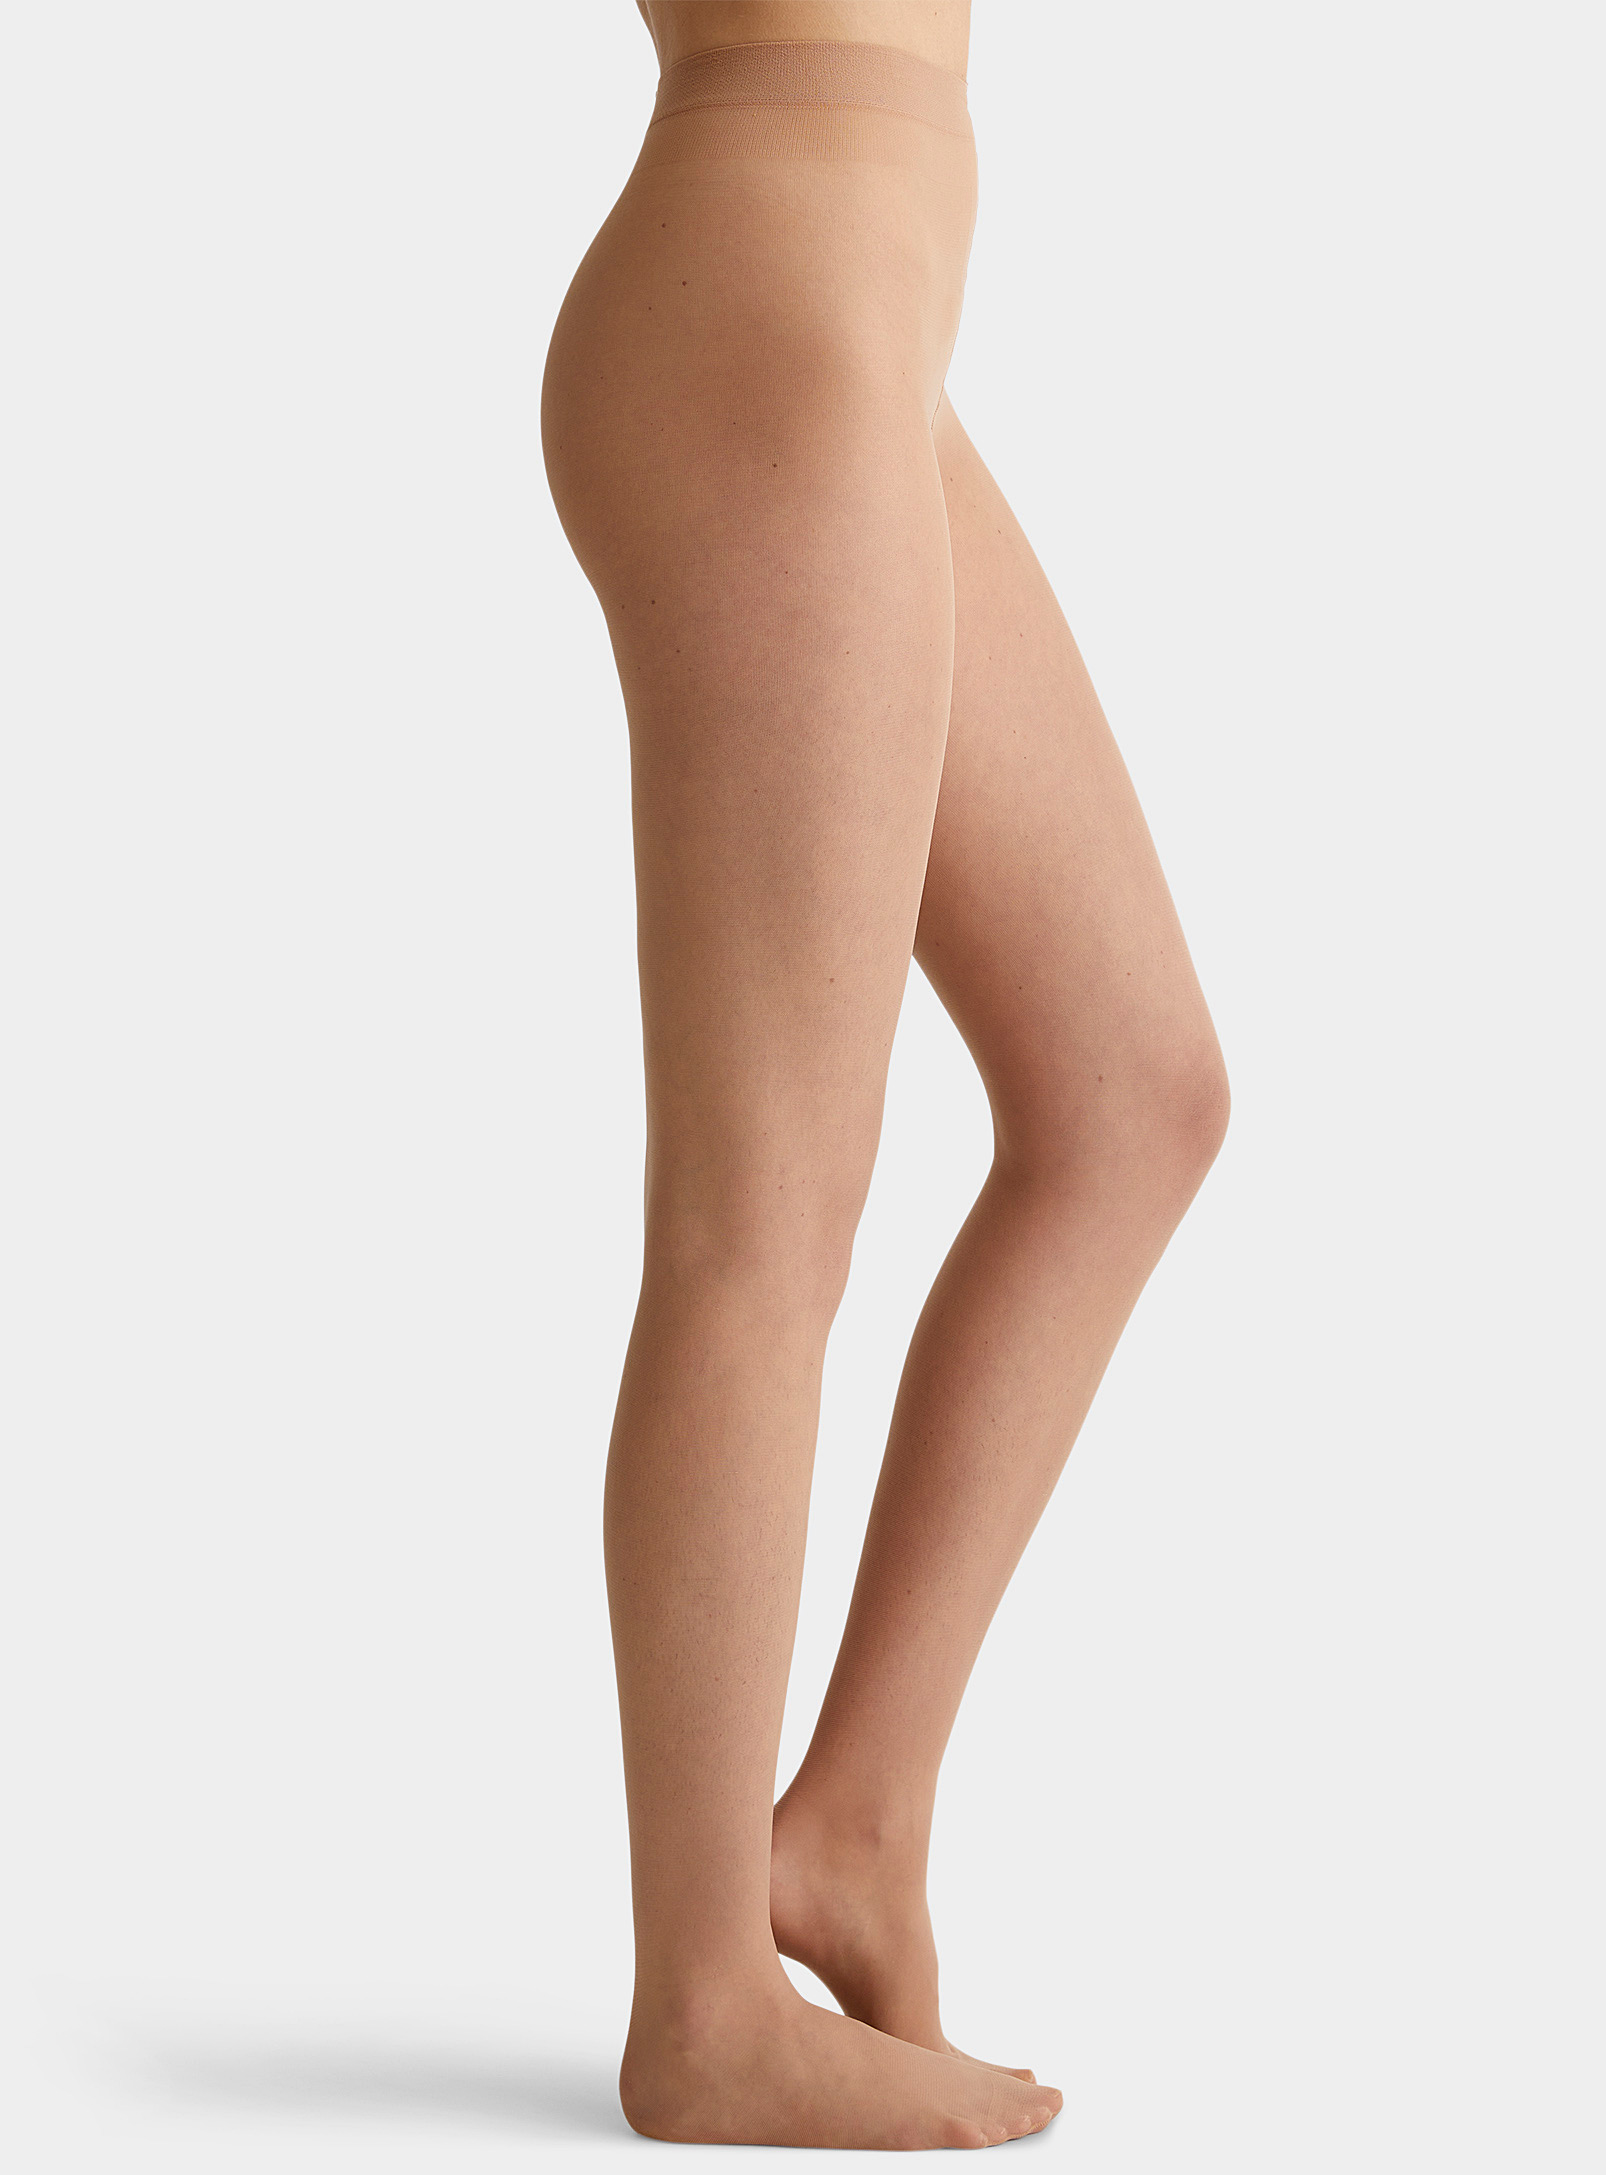 Swedish Stockings Elin Pantyhose Set Of 2 In Tan